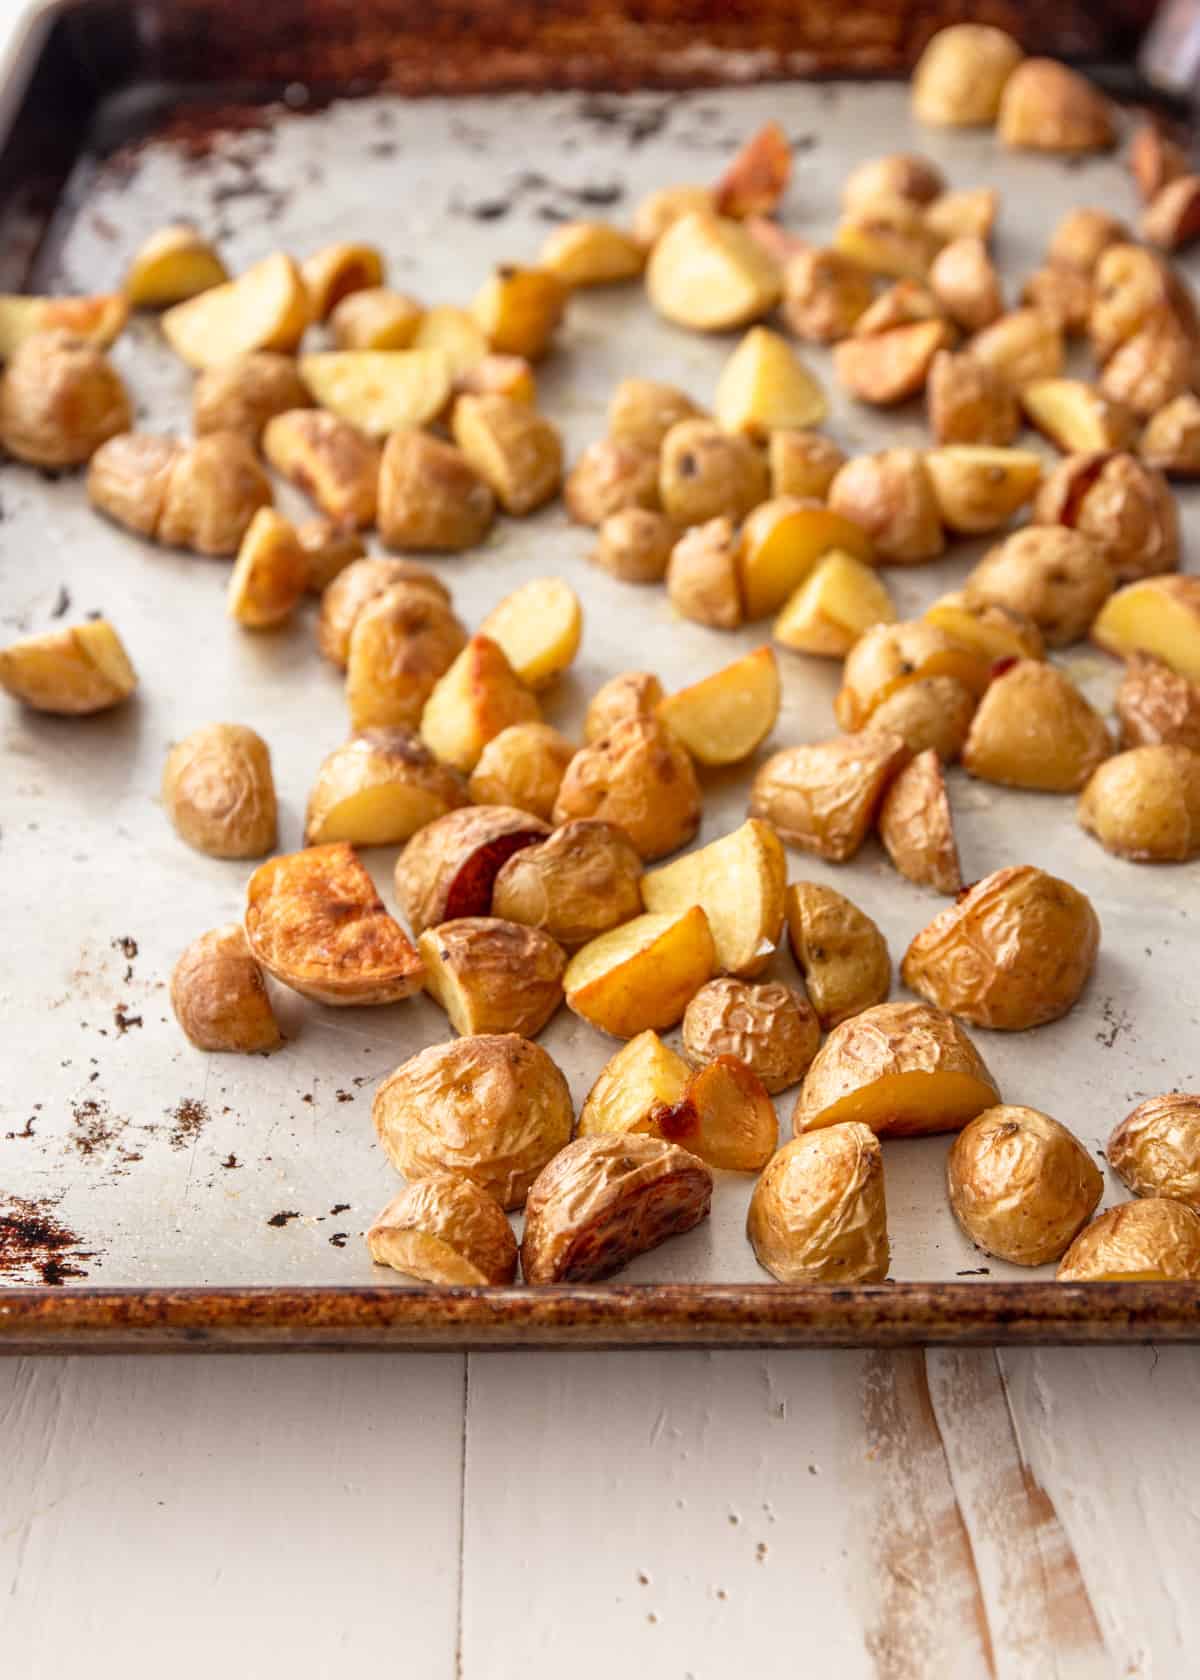 roasted potatoes on a sheet pan